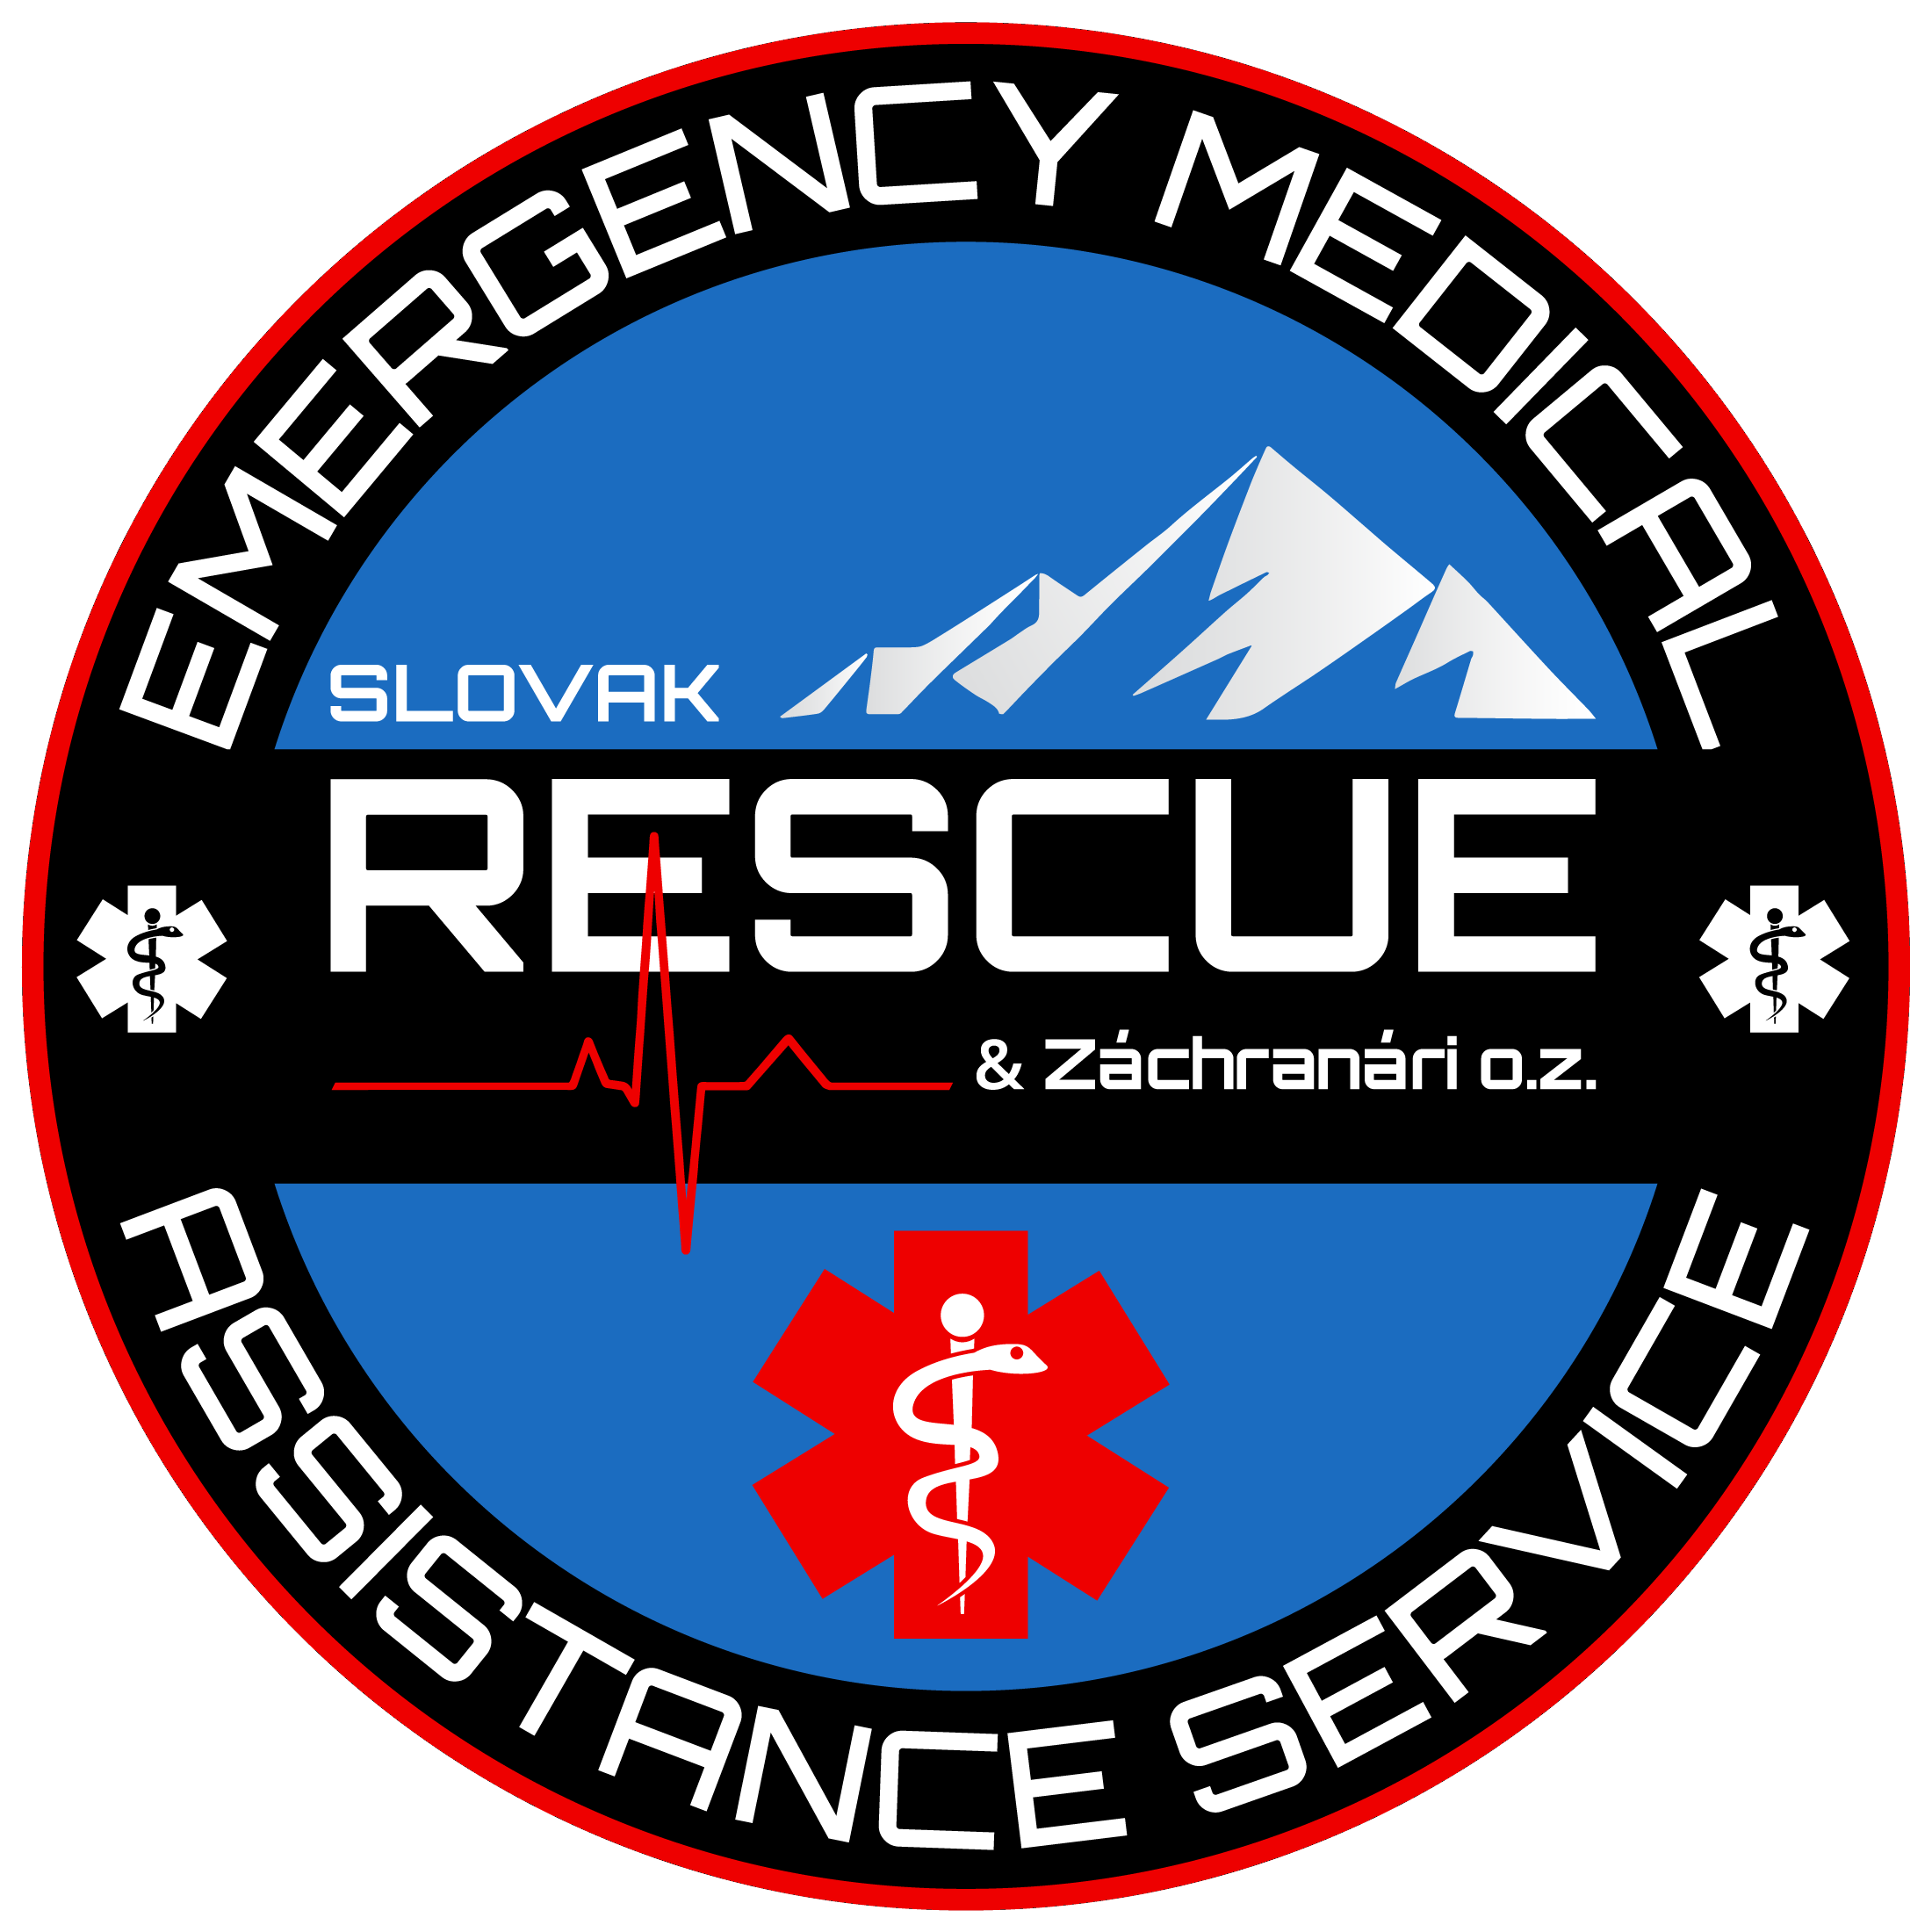 Slovak Rescue